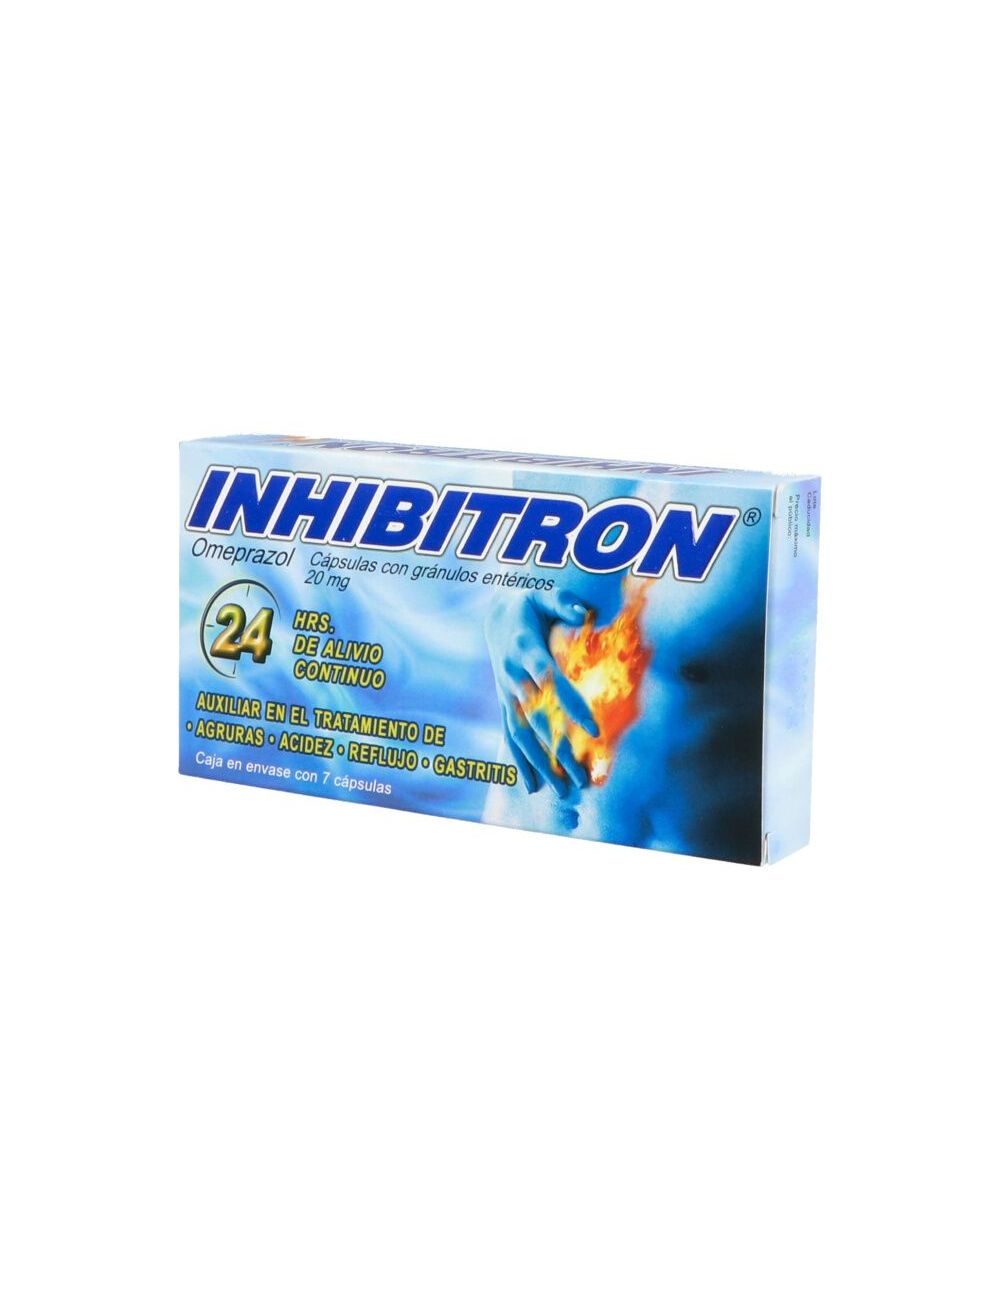 Inhibitron 20 mg Caja Con 7 Cápsulas